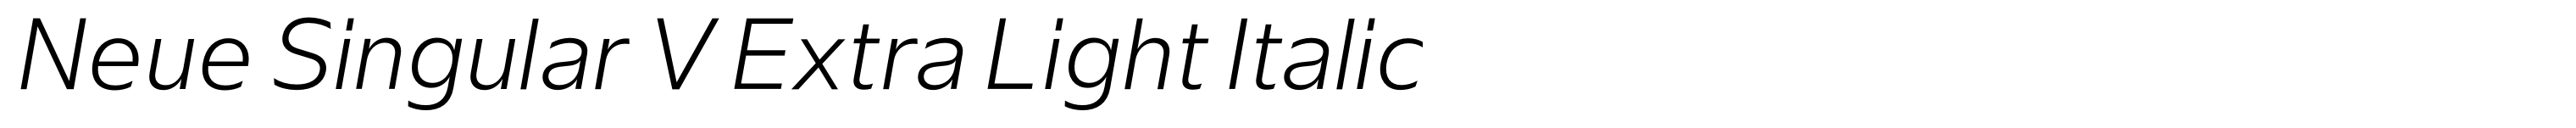 Neue Singular V Extra Light Italic